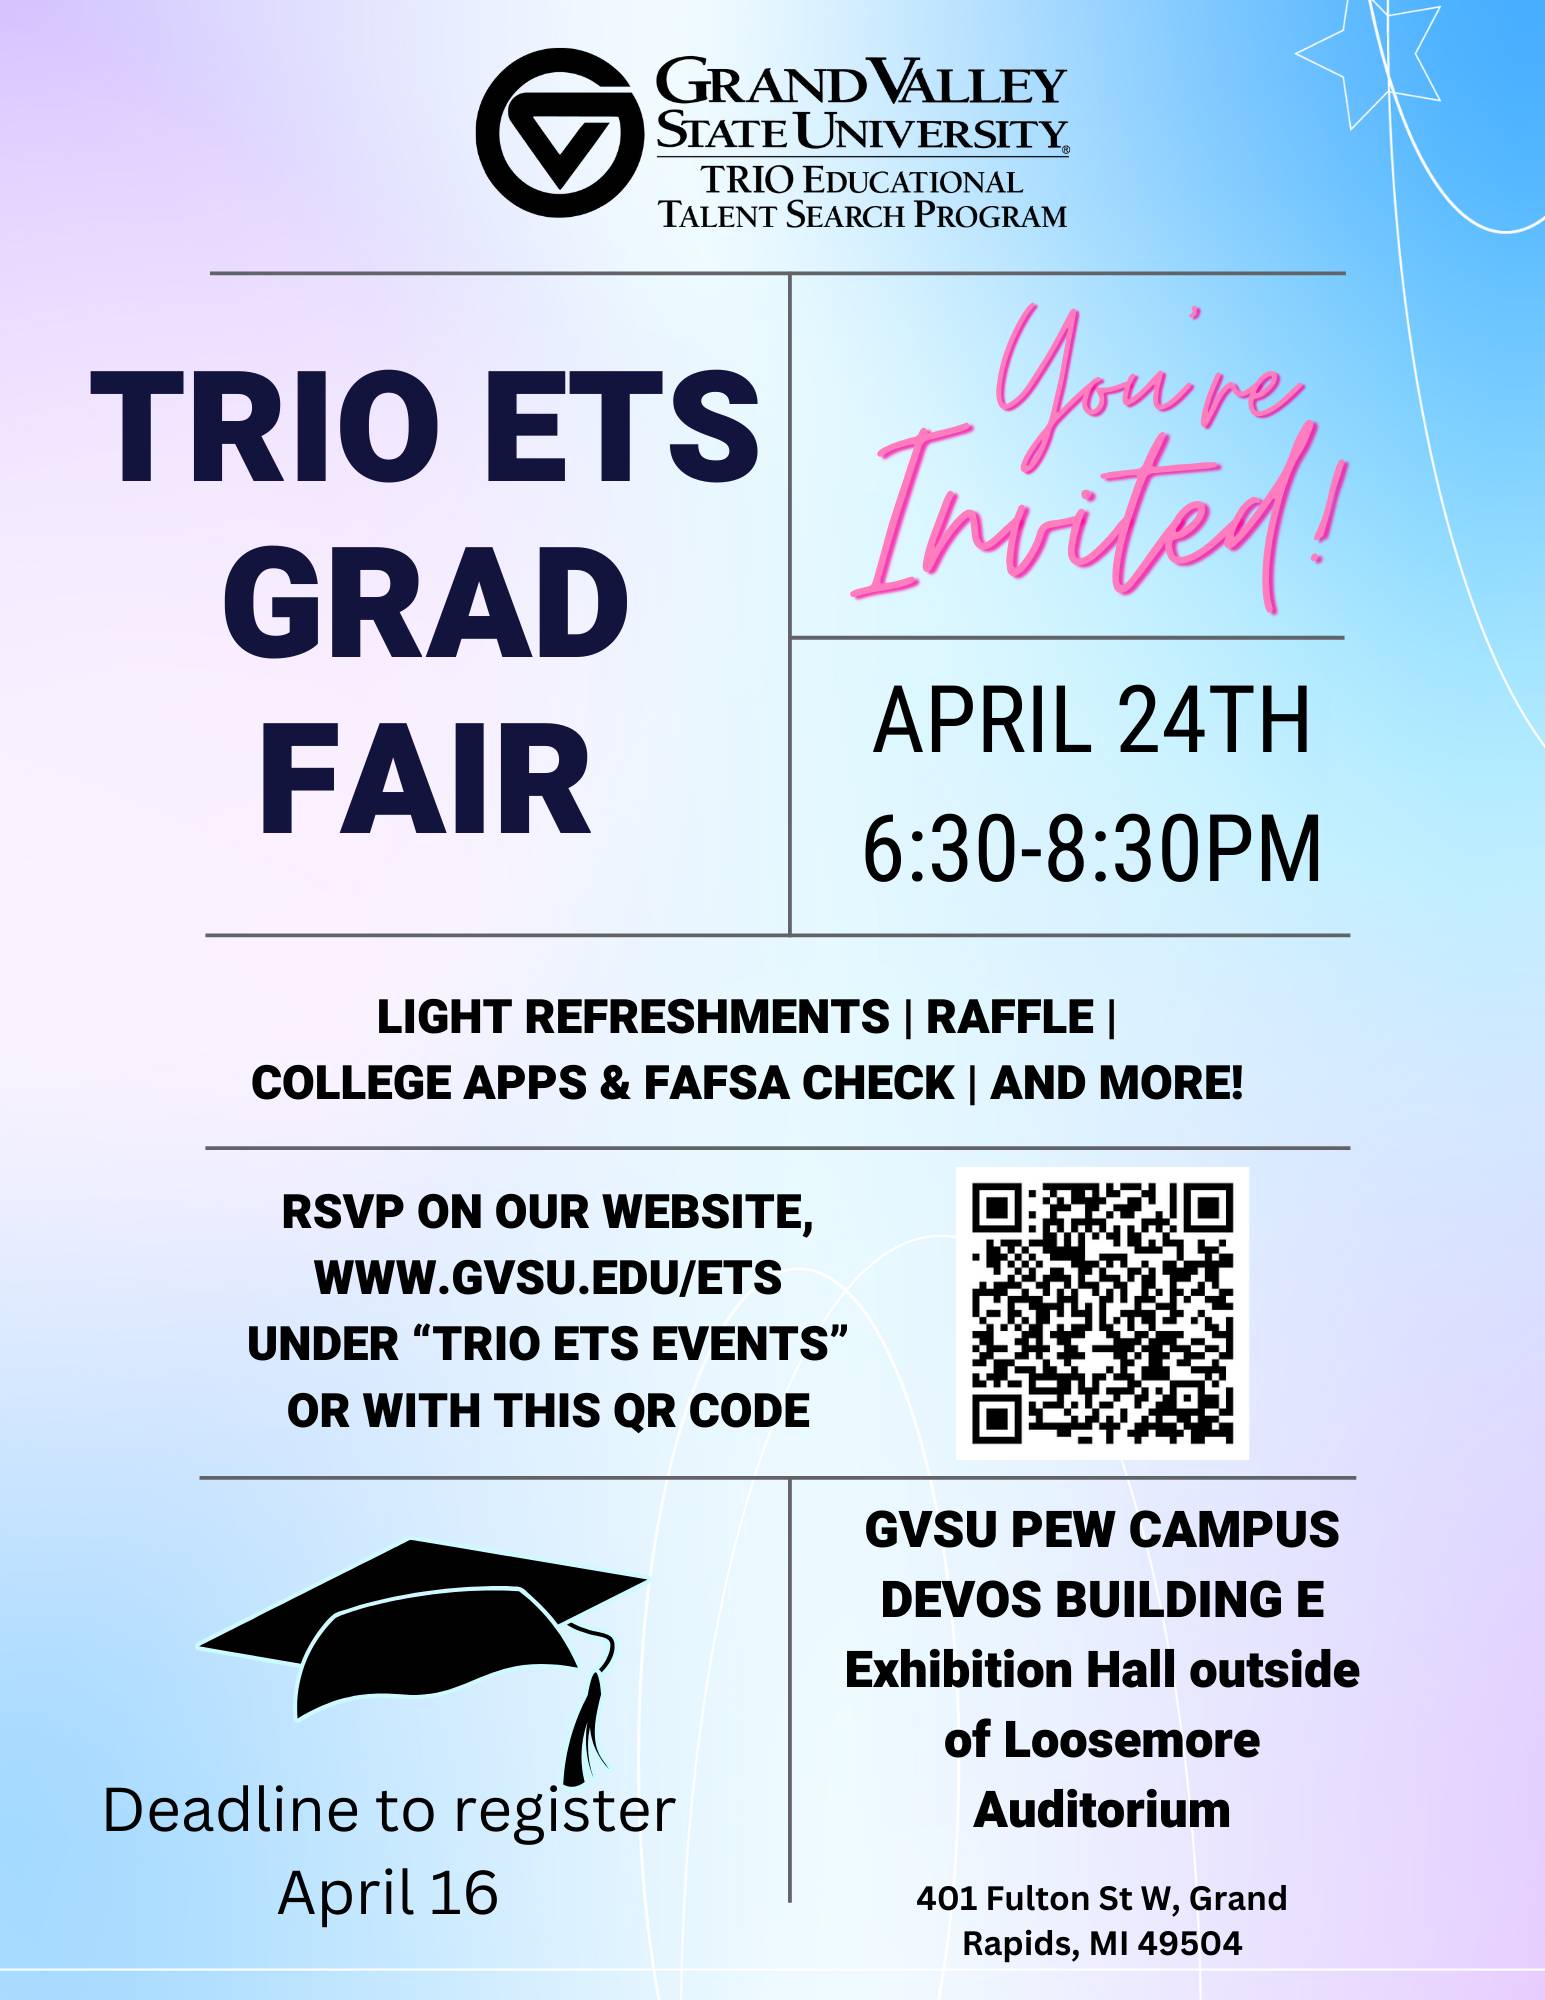 TRIO ETS Grad Fair, April 24th, 6:30 - 8:30 PM. GVSU Pew Campus DeVos Building E, Exhibition Hall outside Loosemore Auditorium. Sign up on our website.